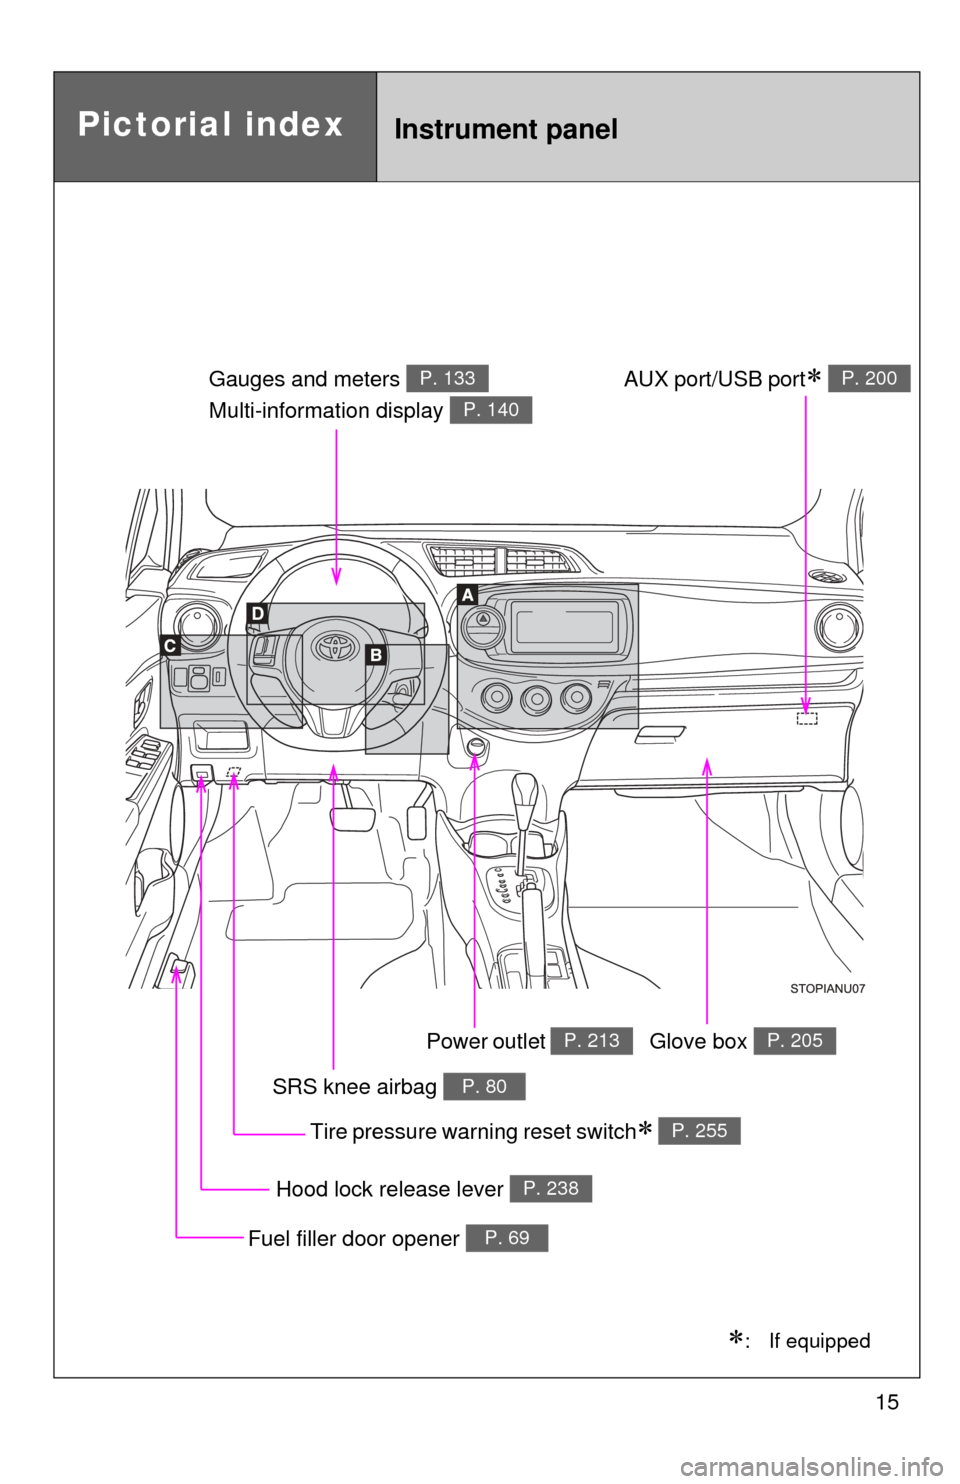 TOYOTA YARIS 2013 3.G User Guide 15
Pictorial indexInstrument panel
SRS knee airbag P. 80
Hood lock release lever P. 238
Gauges and meters 
Multi-information display P. 133
P. 140
Glove box P. 205
Fuel filler door opener P. 69
: I